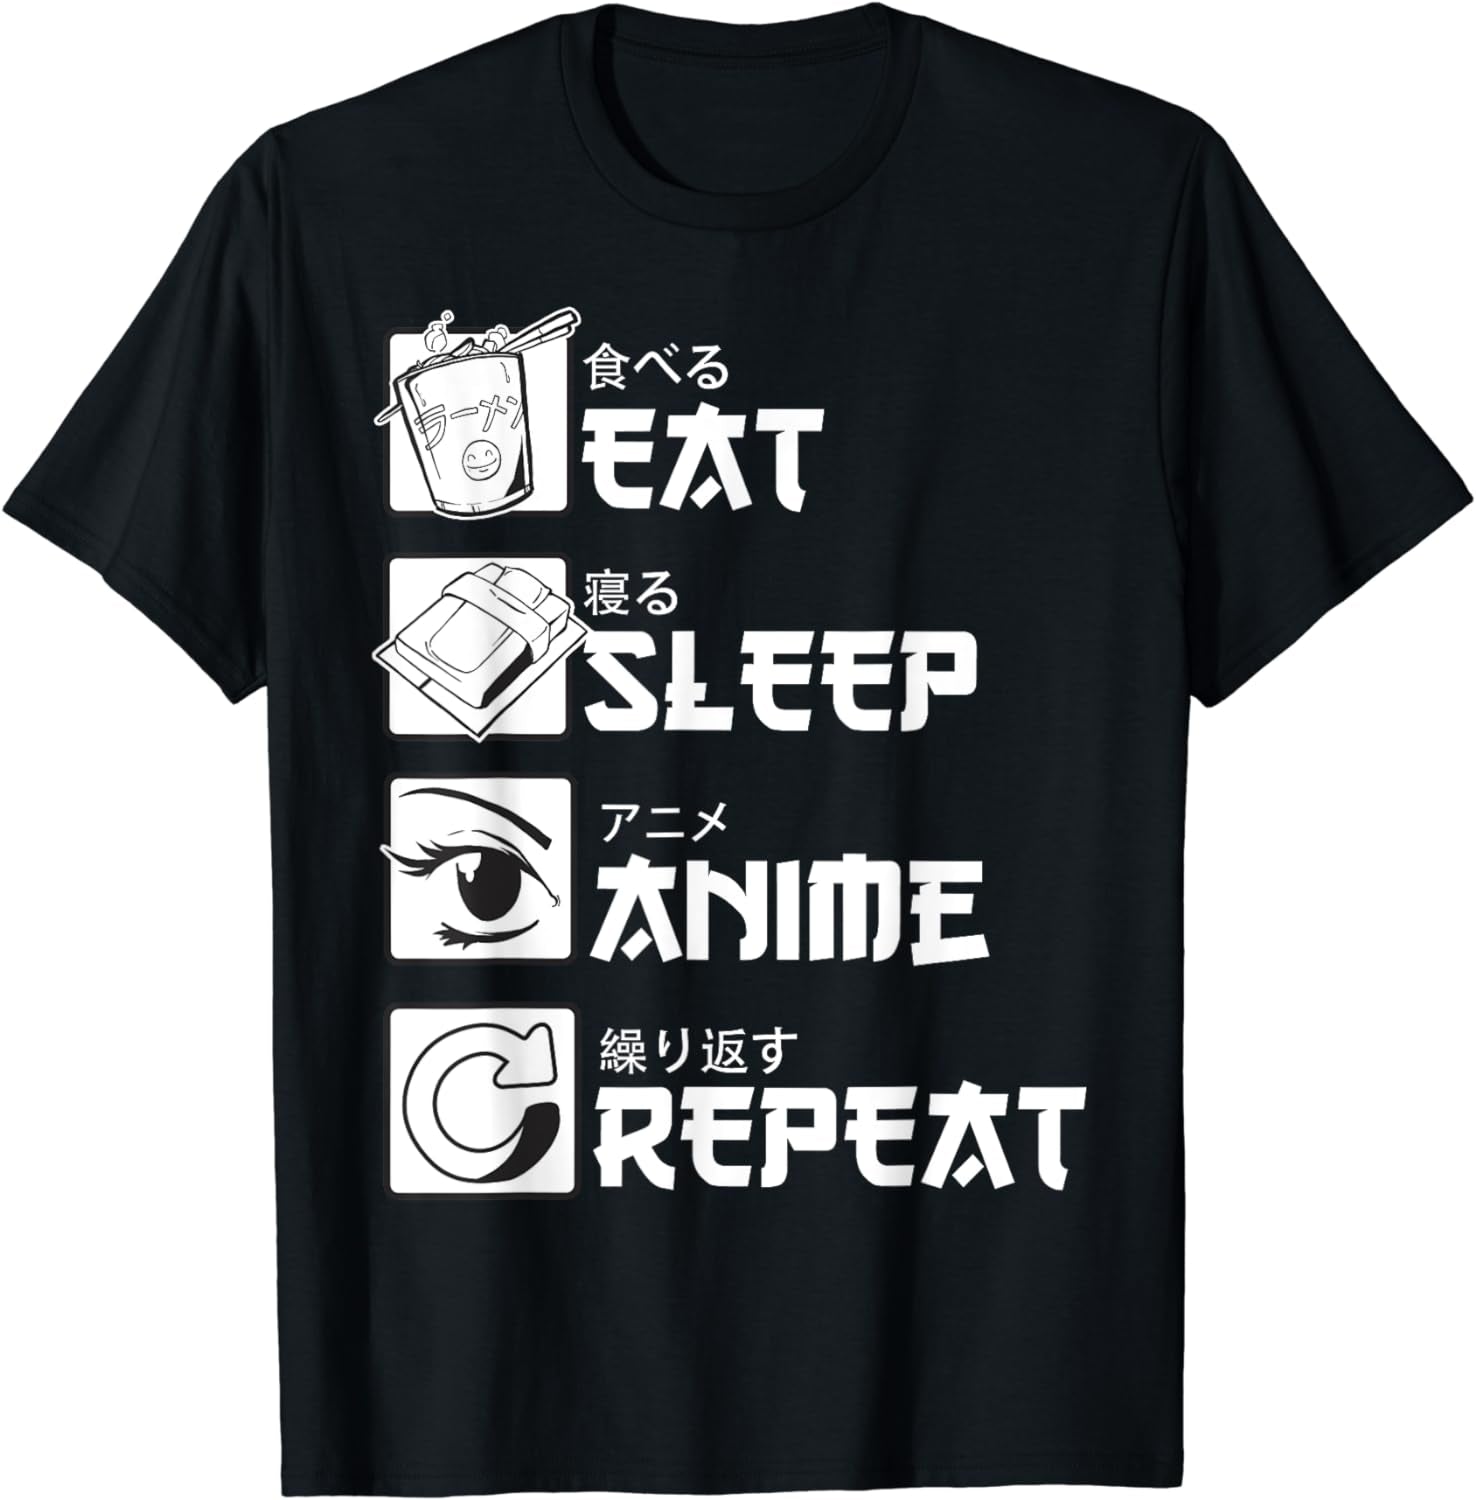 Eat Sleep Anime Repeat Manga Shirts T-Shirt